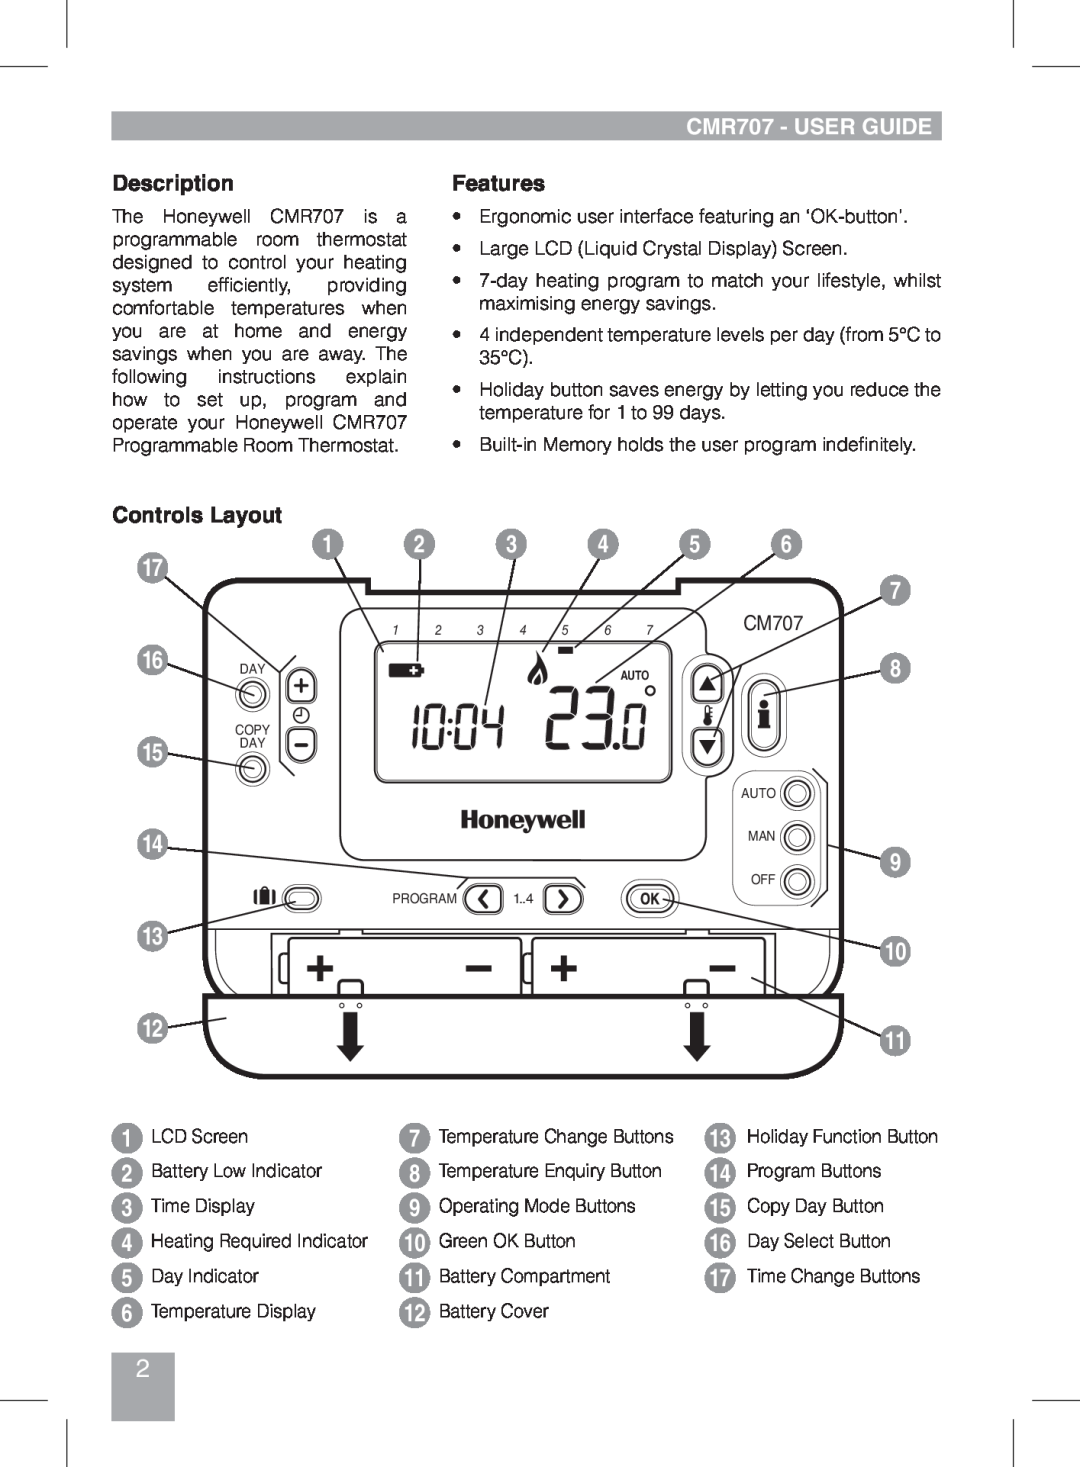 Honeywell CMR707A1049 manual Description, CMR707 - USER GUIDE, Features, CM707, Controls Layout 